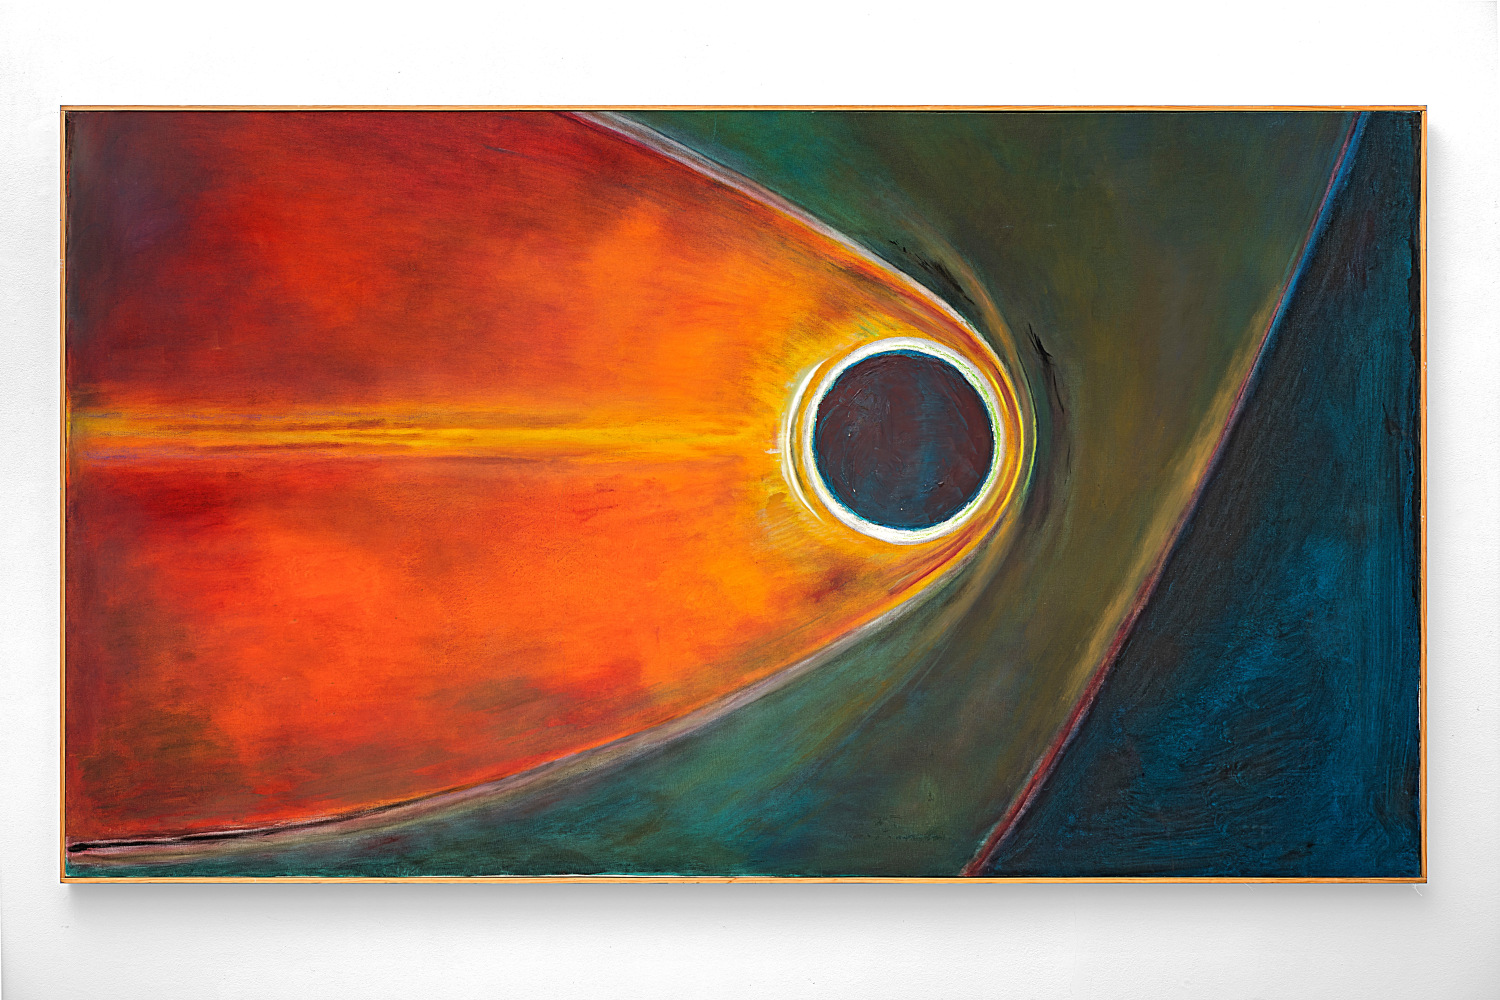 Frederick Wight (1902-1986)
Sky Event, 1969&amp;nbsp;
oil on canvas
42 x 75 inches;&amp;nbsp;&amp;nbsp;106.7 x 190.5 centimeters
LSFA# 10665&amp;nbsp;